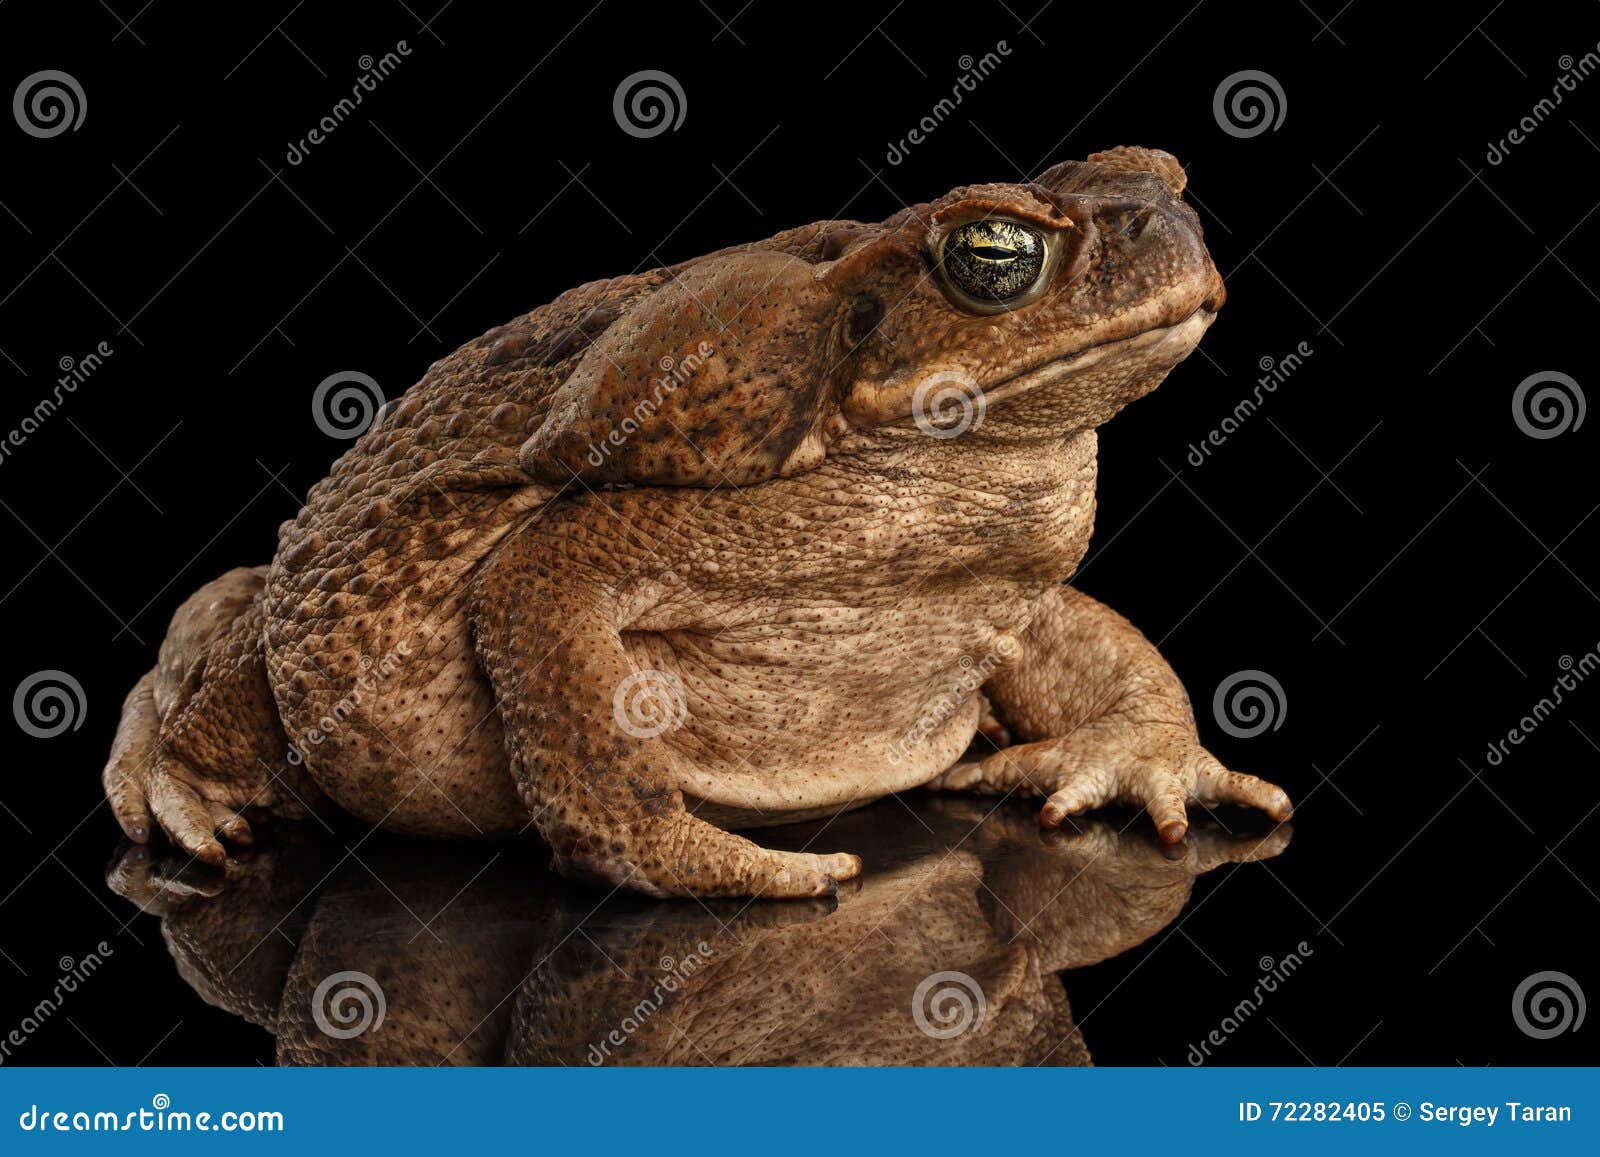 cane toad - bufo marinus, giant neotropical, marine, black